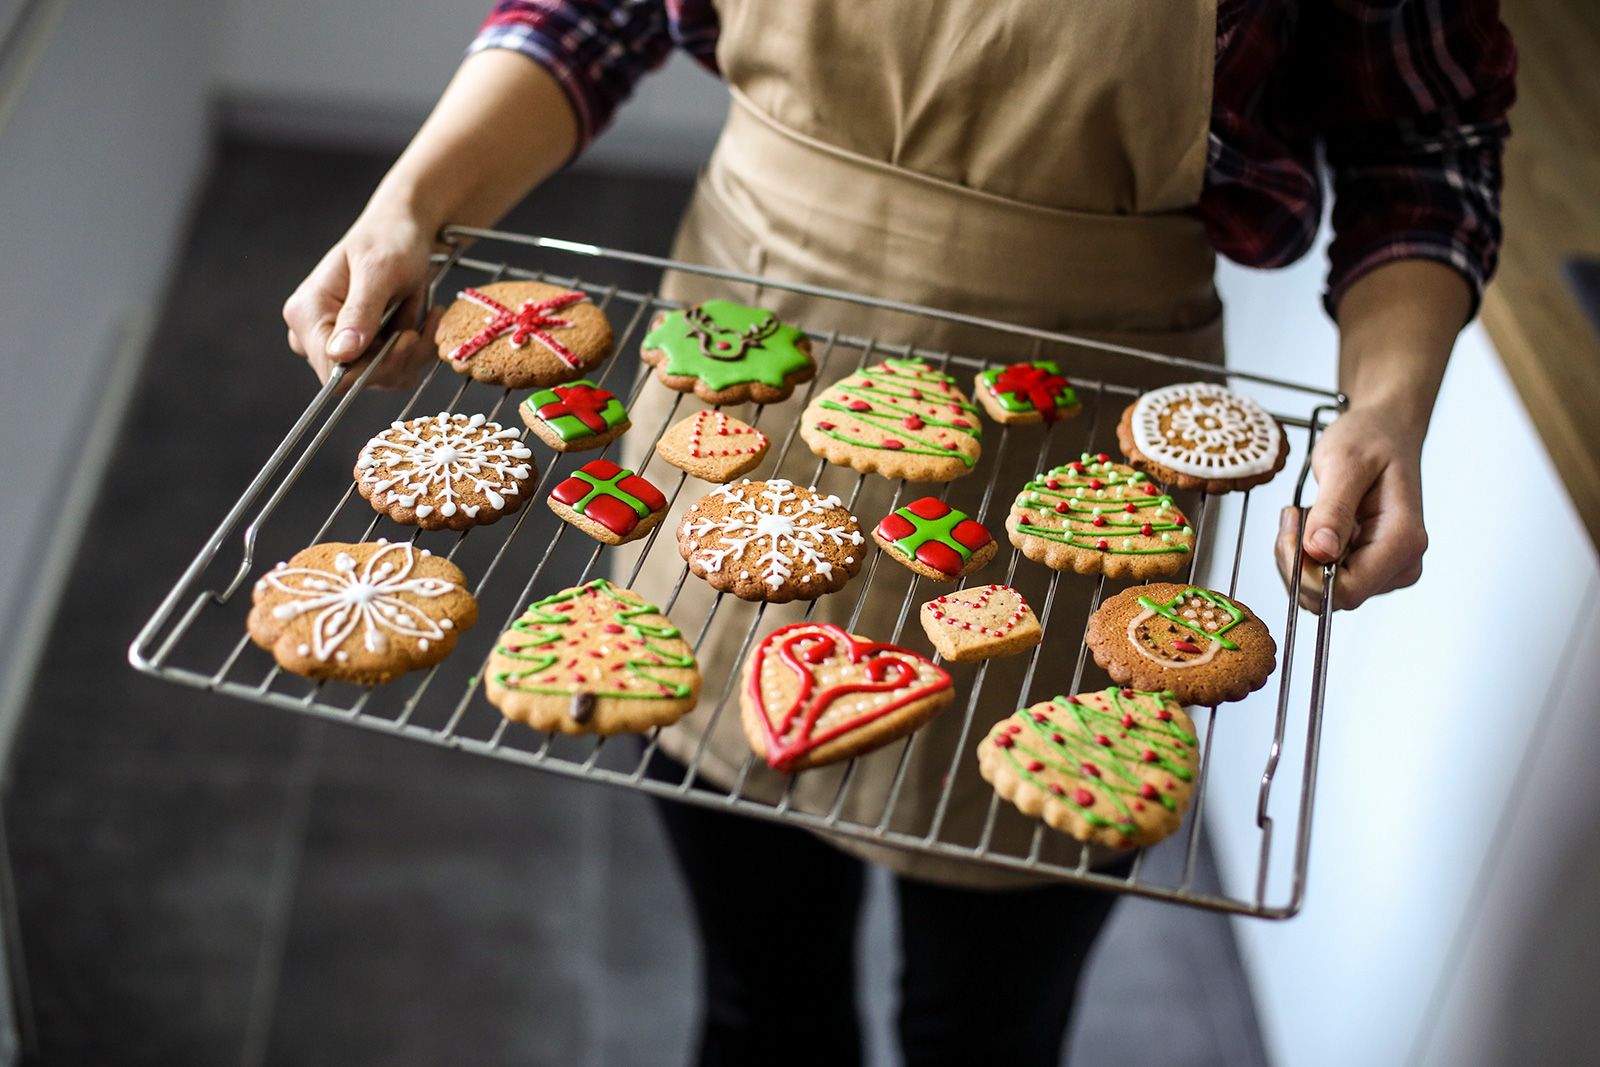 https://media.cnn.com/api/v1/images/stellar/prod/221207140902-02-christmas-cookies-wellness-stock.jpg?c=original